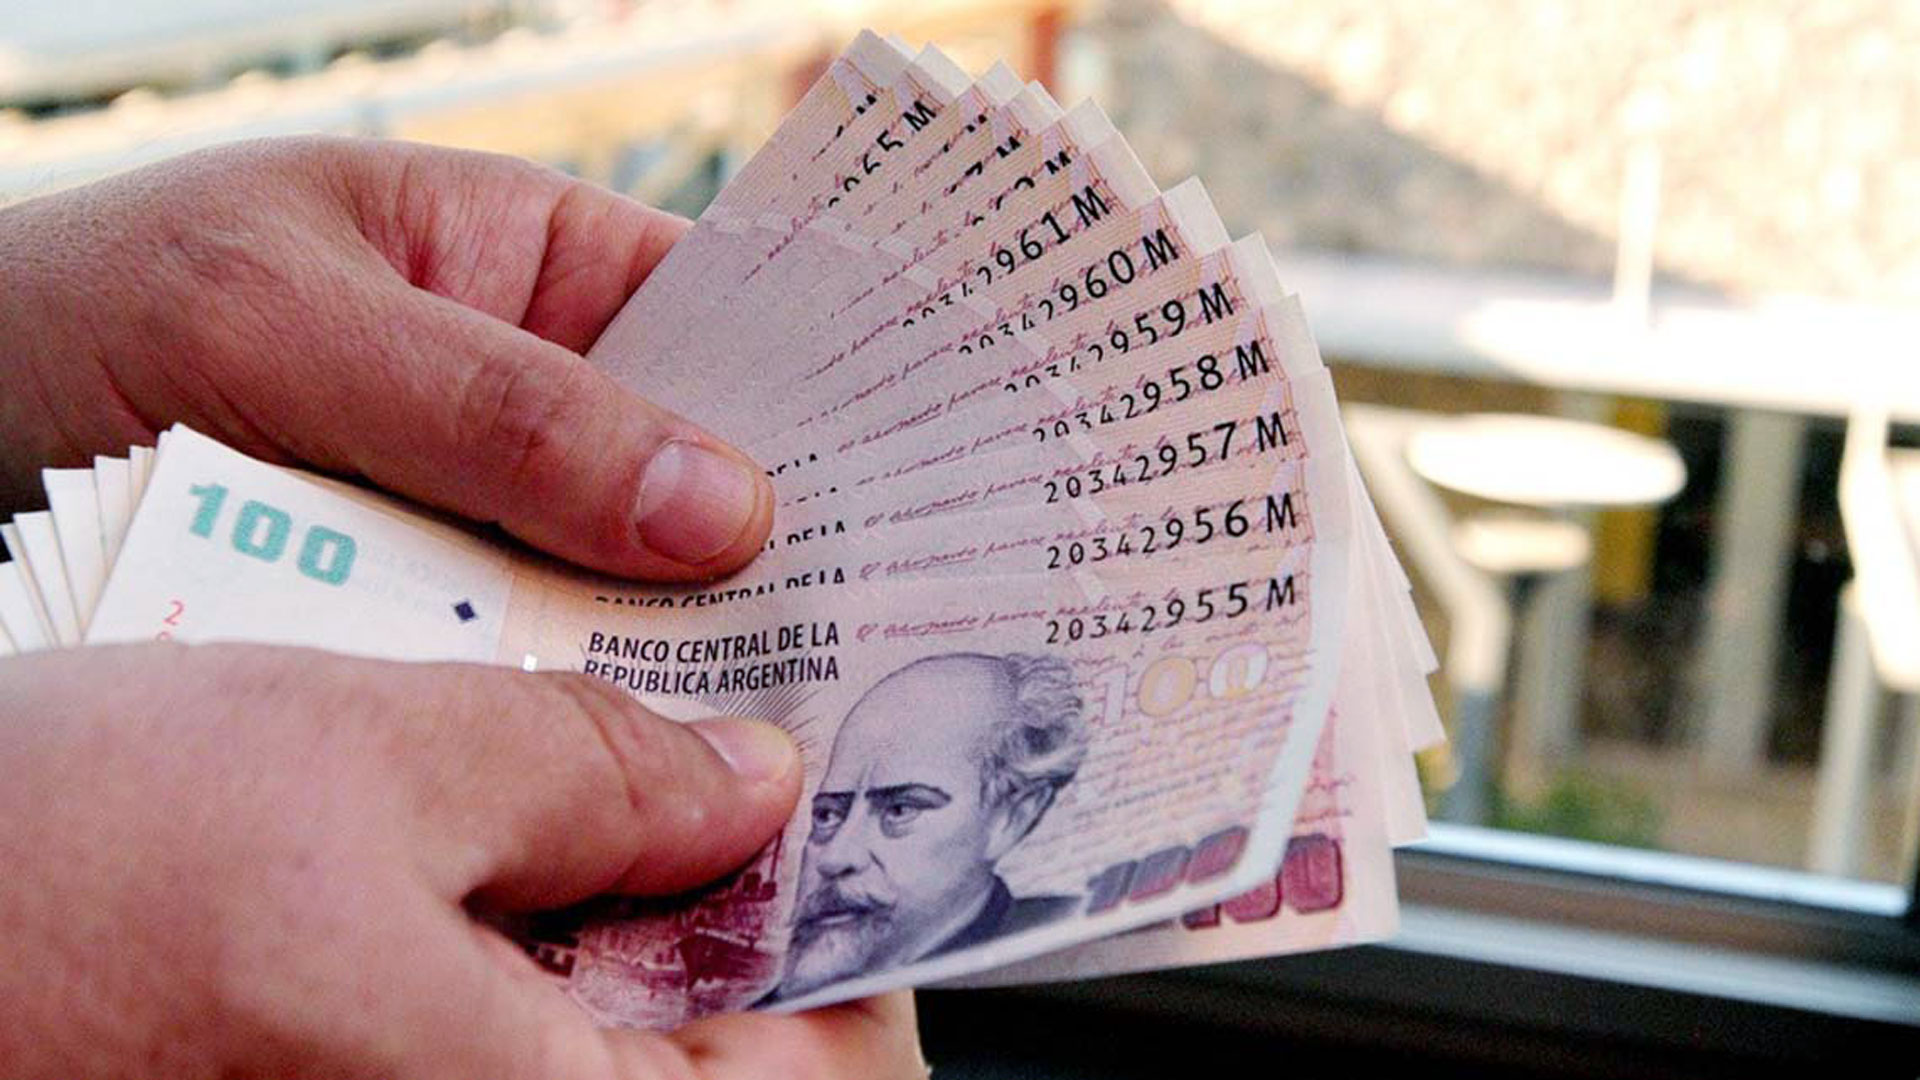 Dos de cada tres billetes en circulación son de 100 pesos. (Infobae)